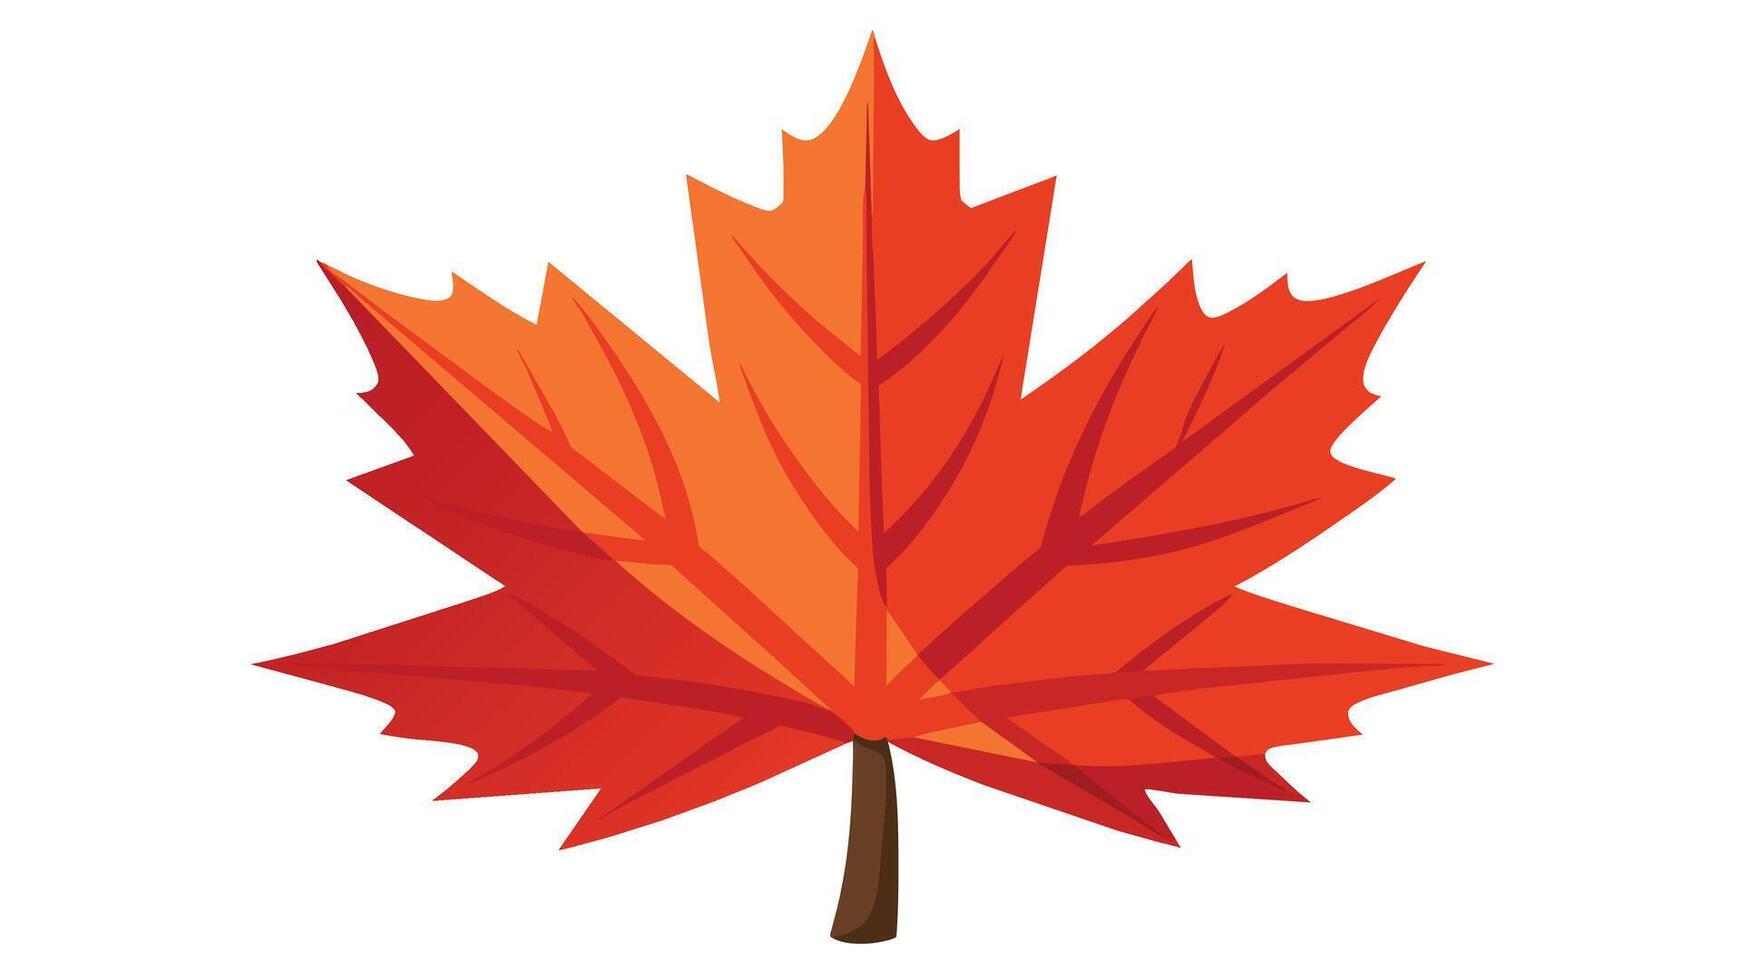 Captivating Maple Leaf Vector Art Explore Nature's Beauty in Digital Design